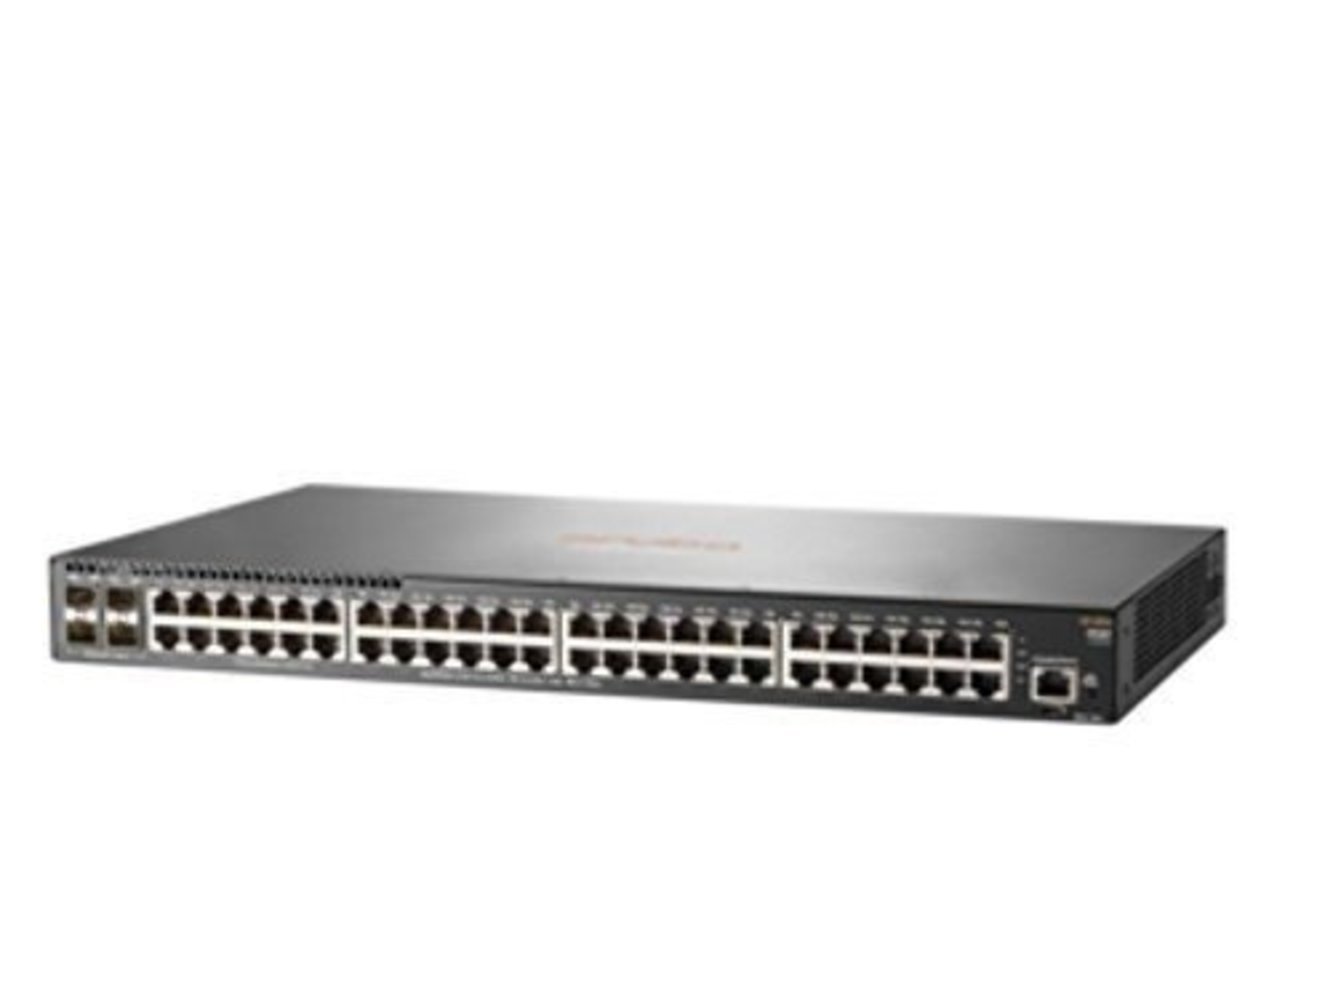  Aruba 2930F 48G 4SFP+ - Switch - L3 - verwaltet - 48 x 10/100/1000 + 4 x 1 Gigabit/10 Gigabit SFP+ (Uplink) - an Rack montierbar